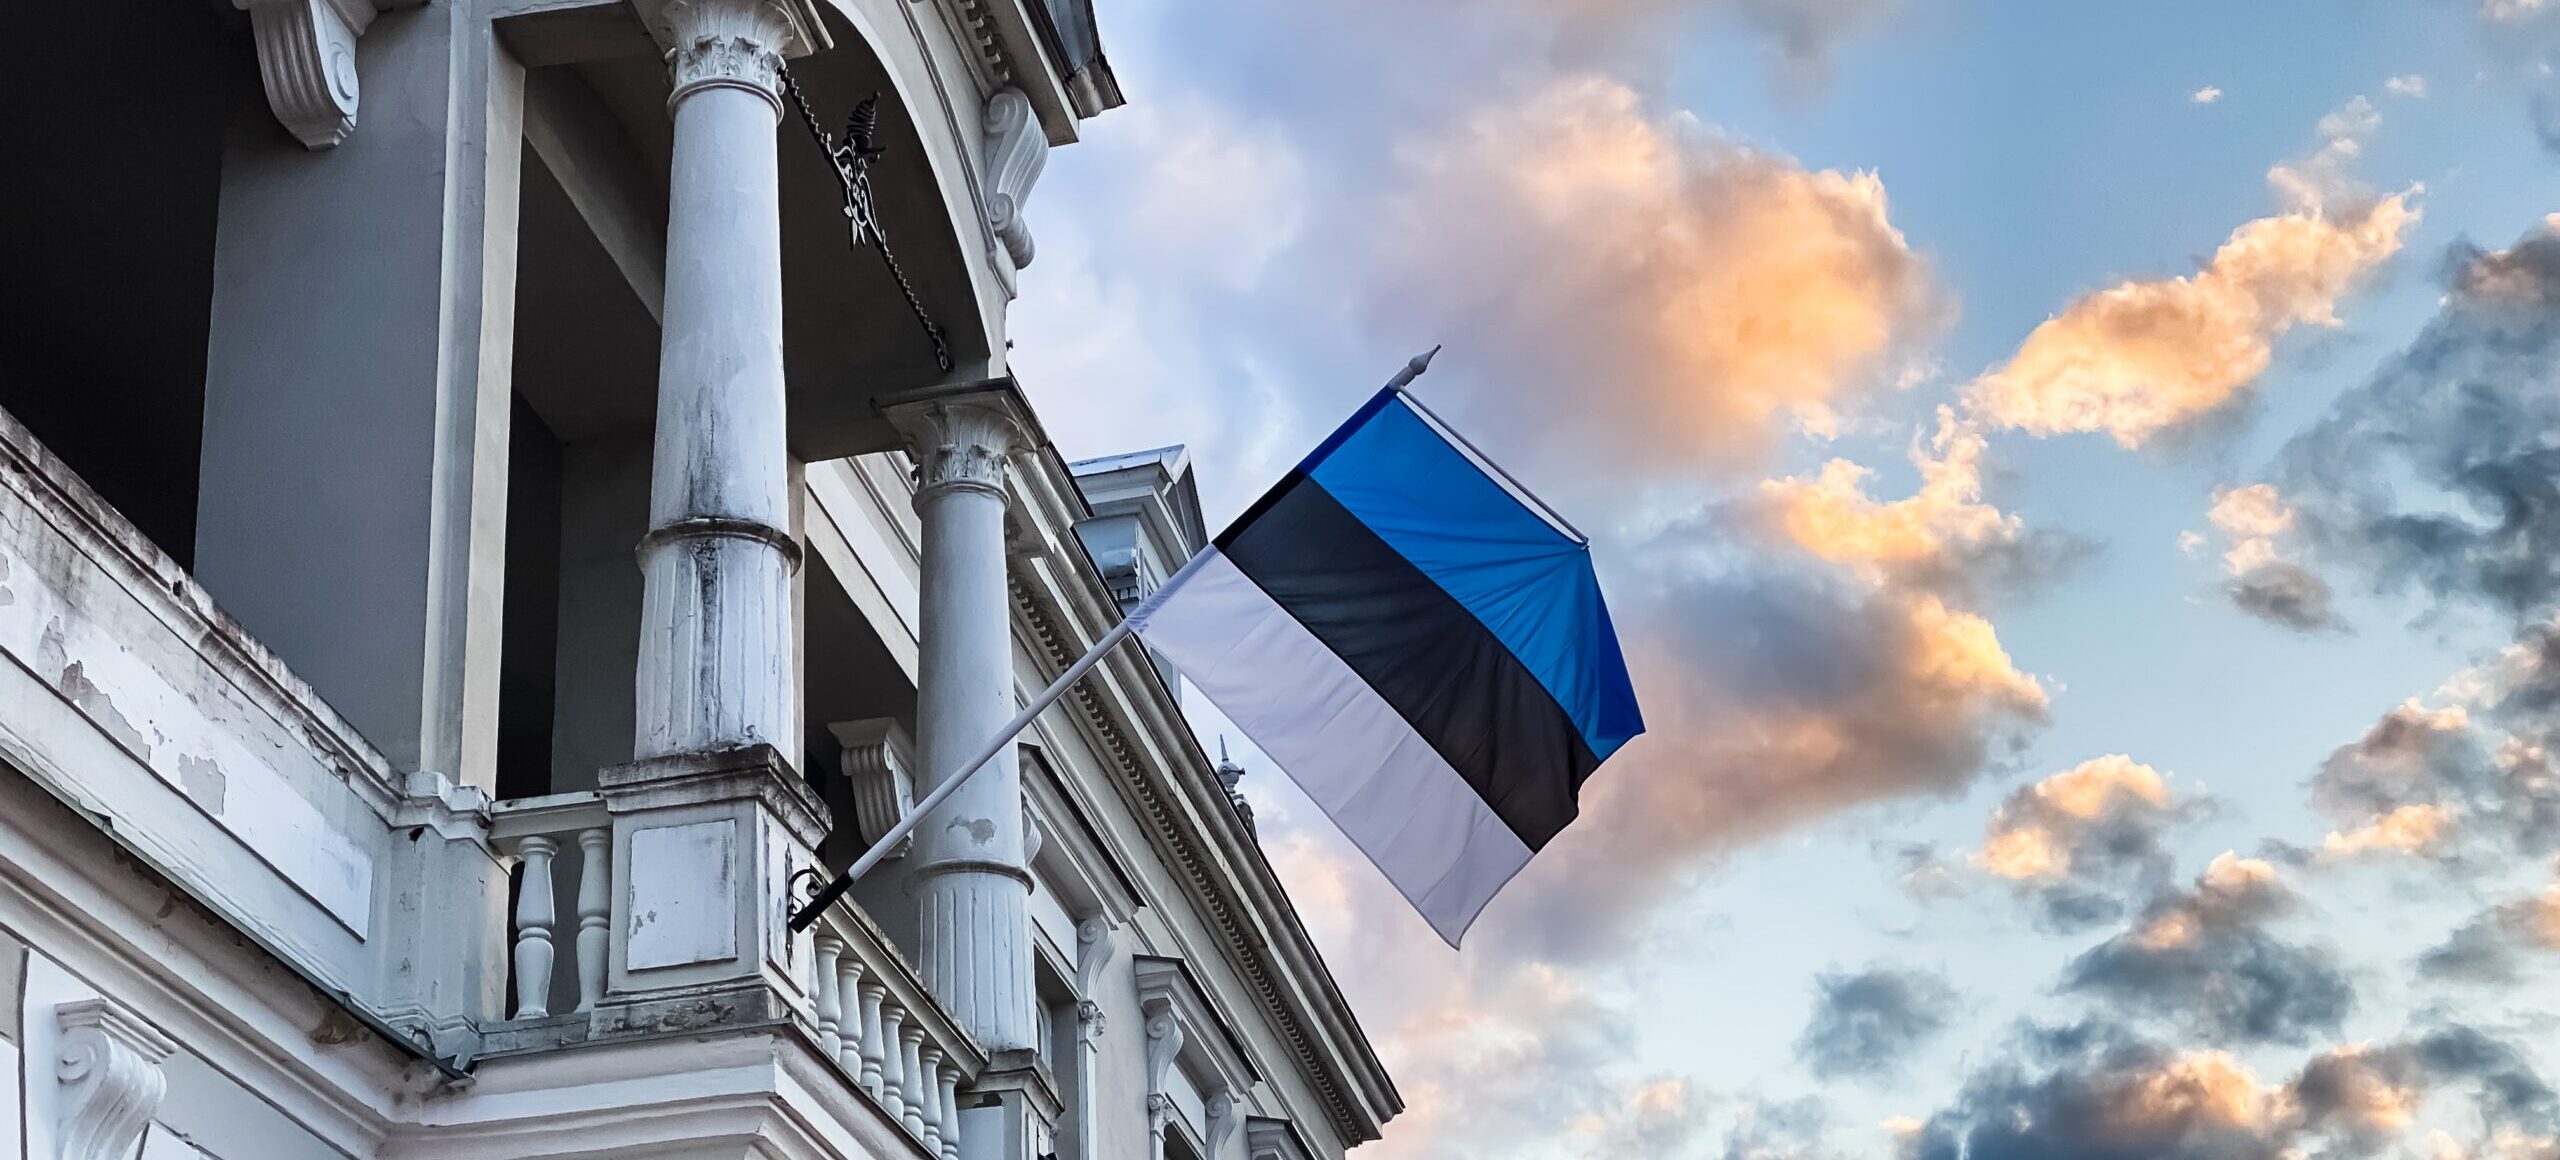 Estonia detains 10 Russian agents